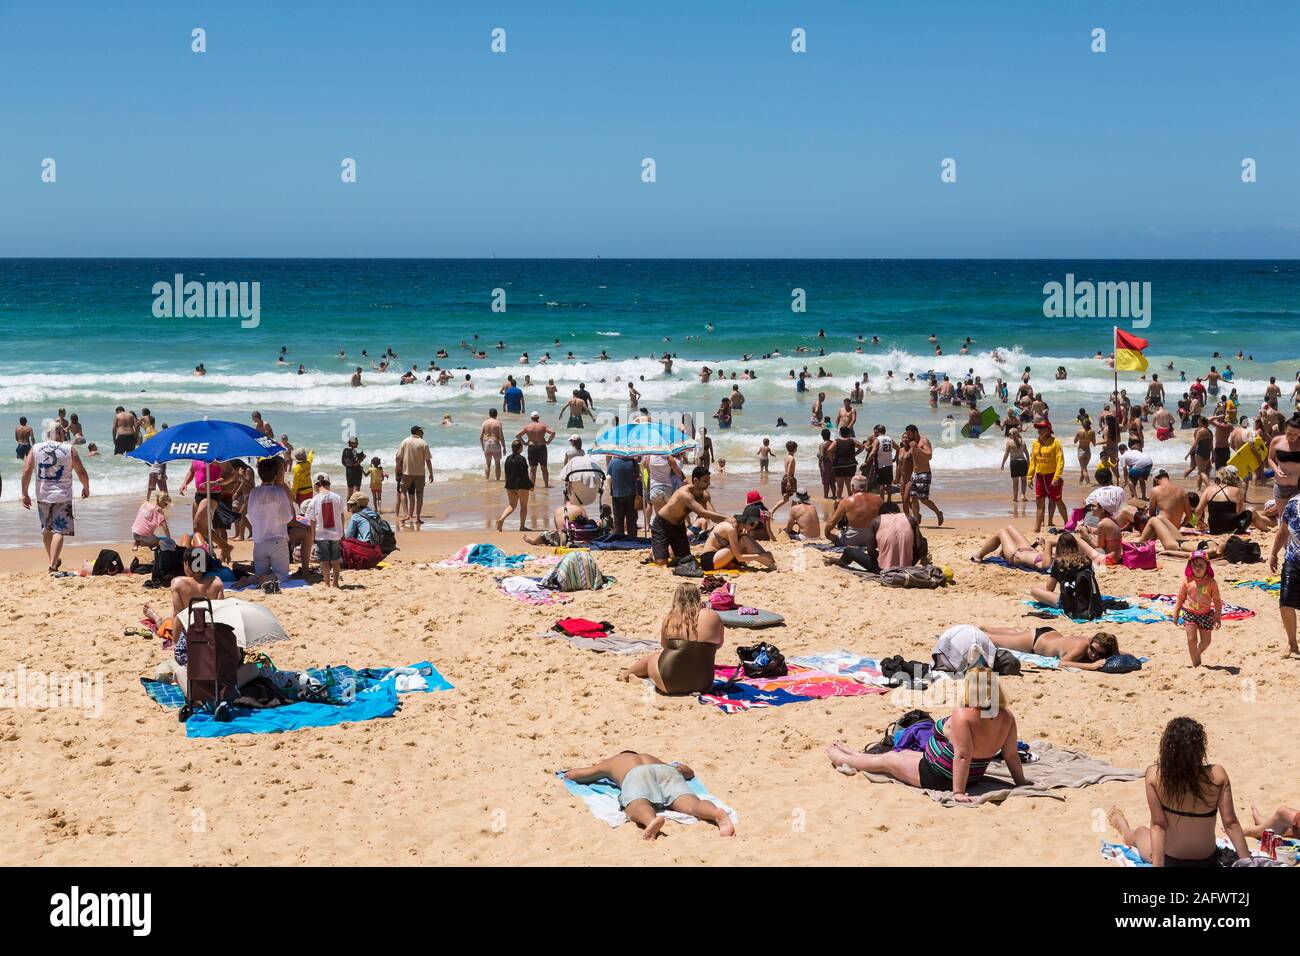 People sunbathing on Manly beach, Sydney, Australia Stock Photo